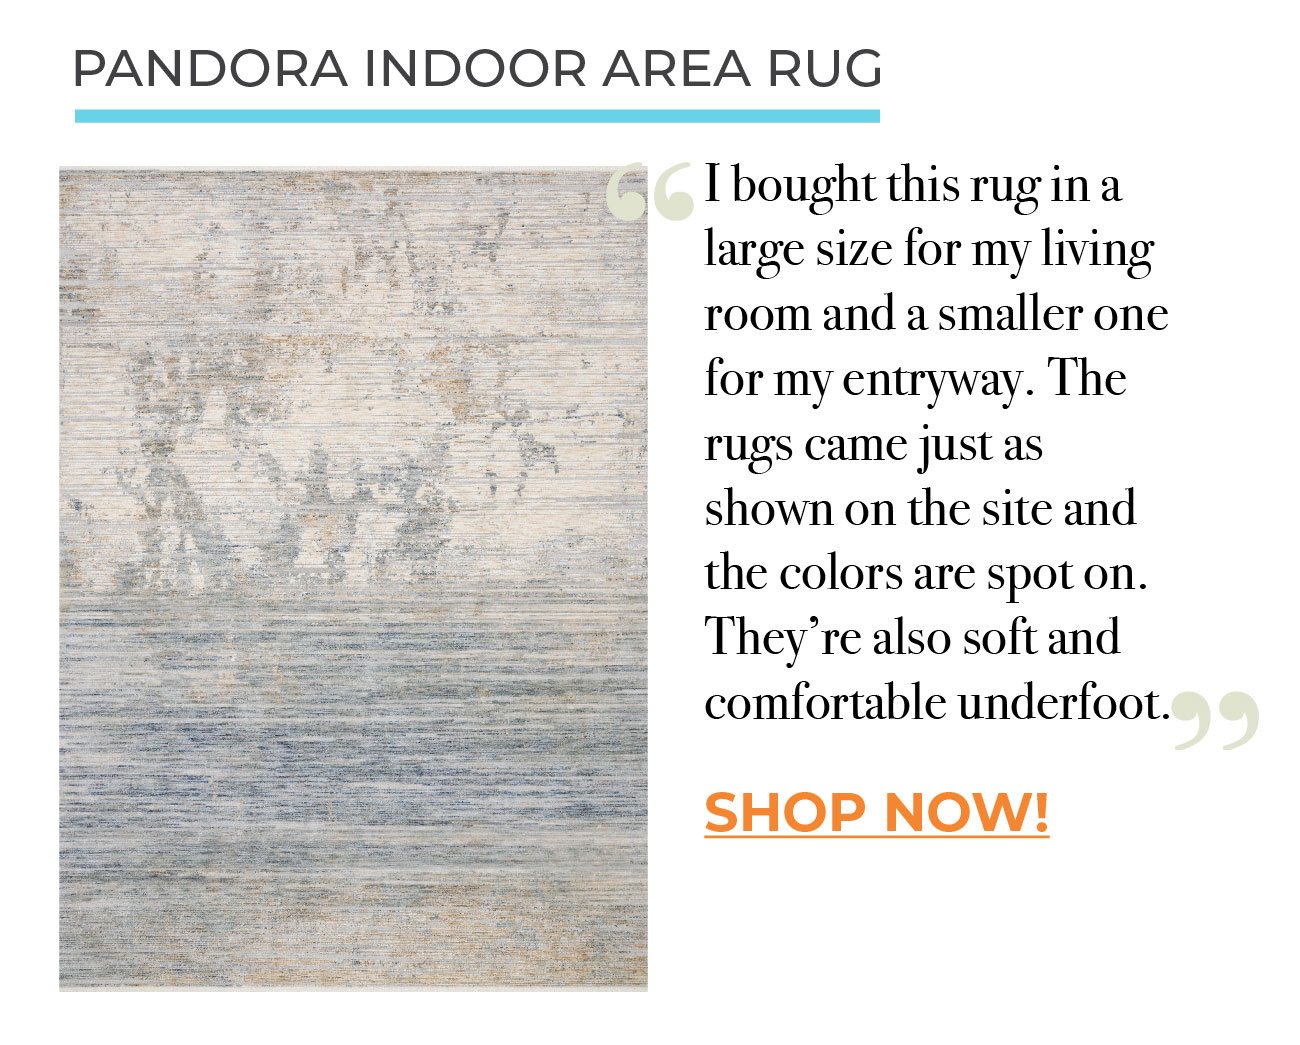 Pandora Indoor Area Rug